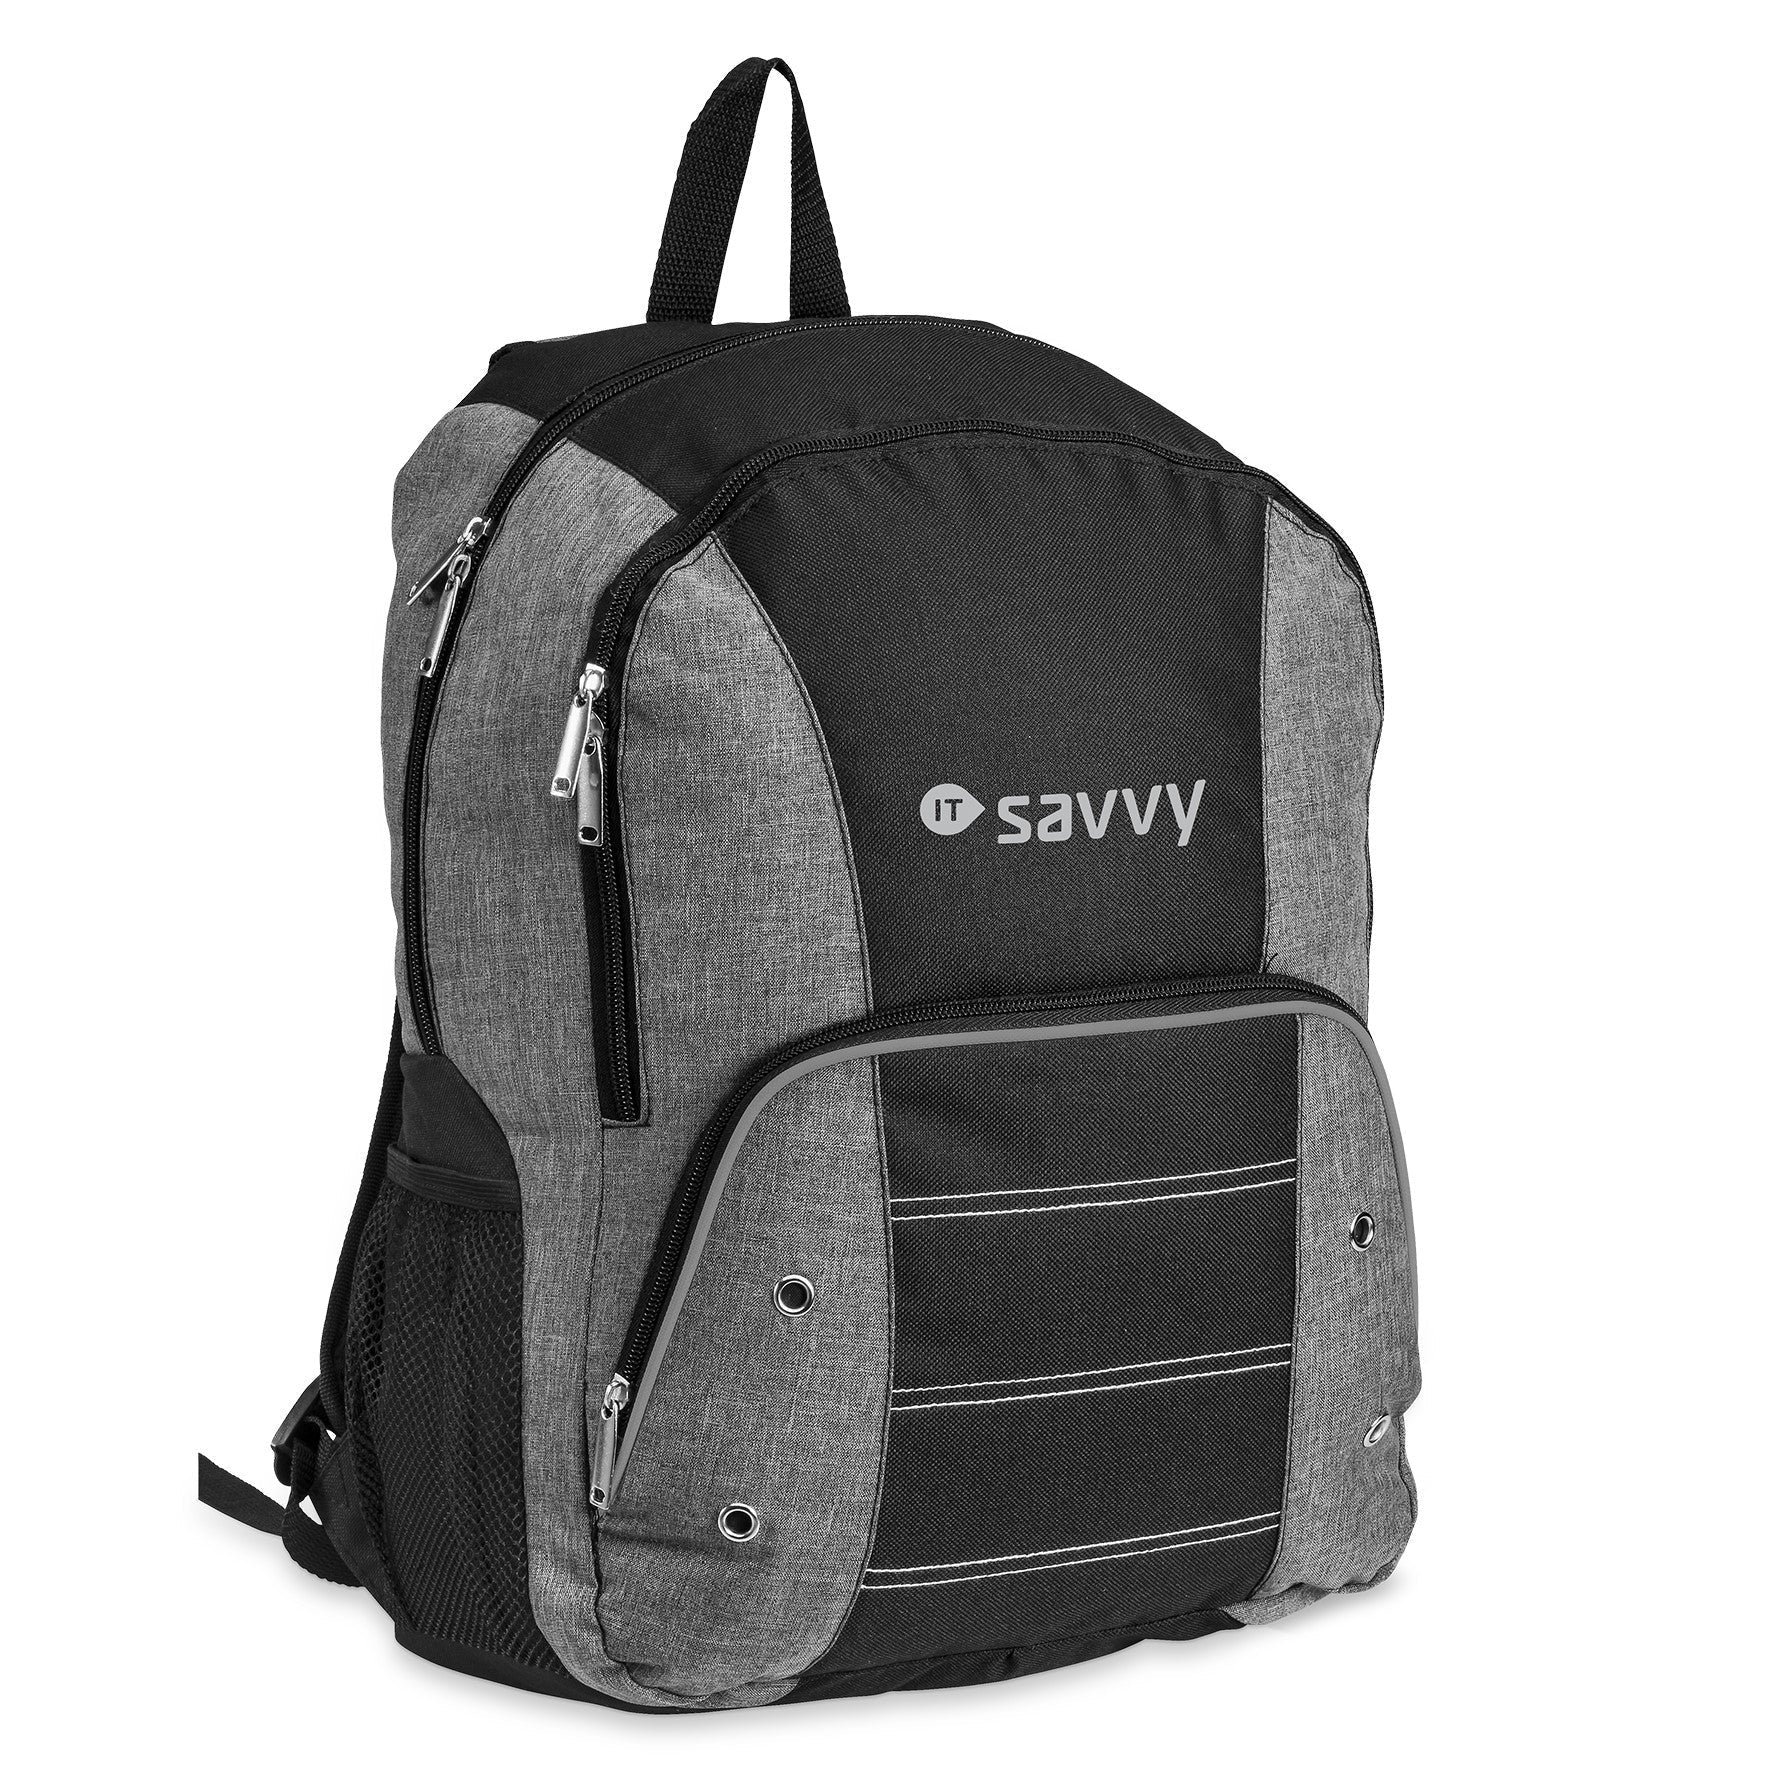 Saturn Tech Backpack-Backpacks-Grey-GY